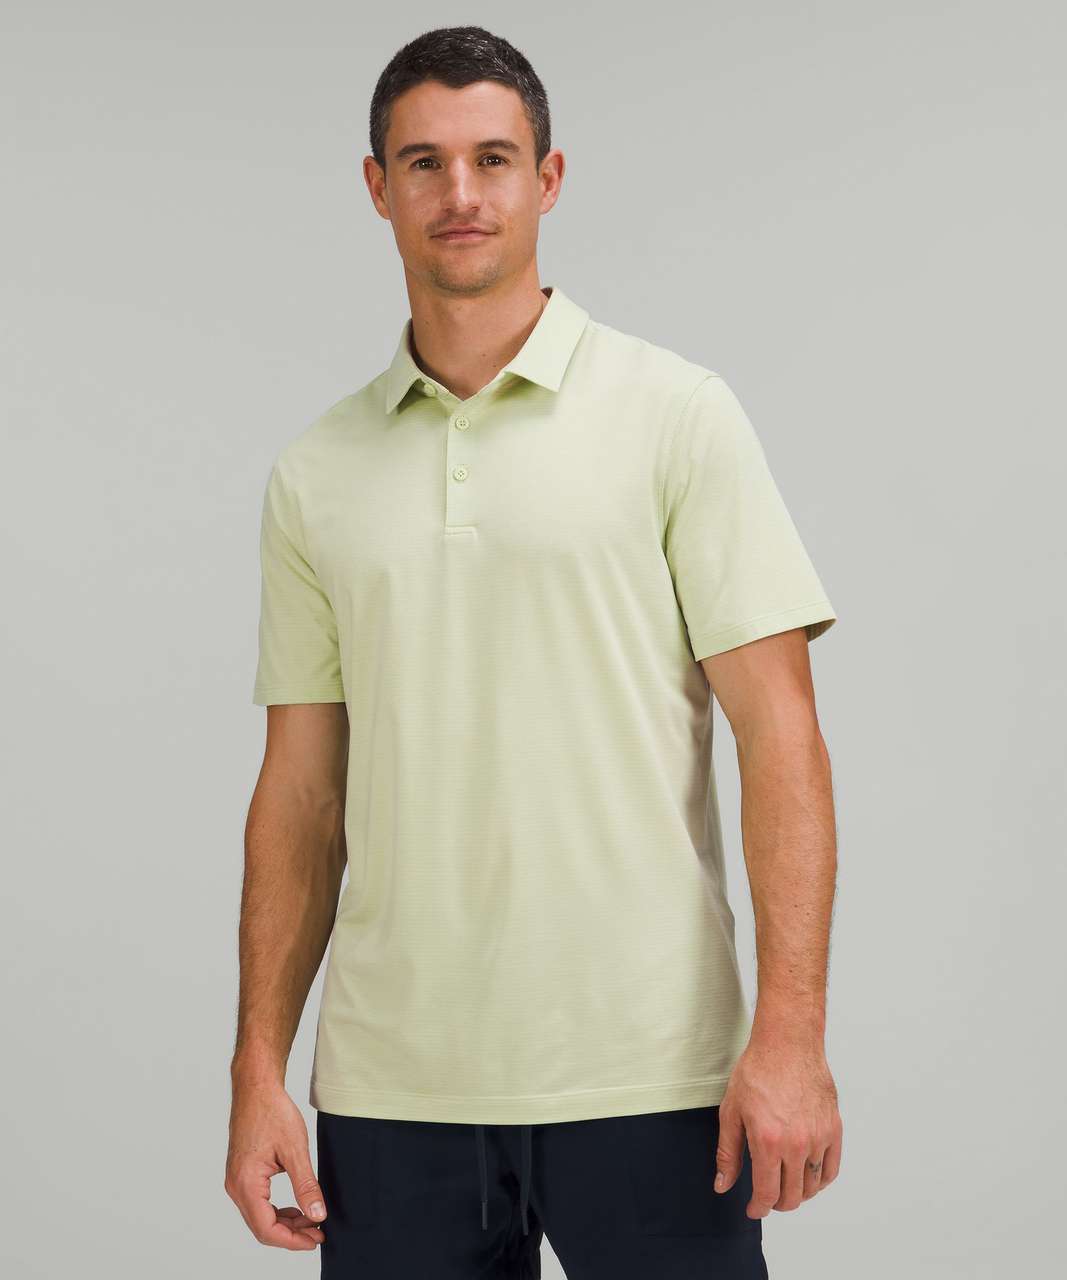 Lululemon Evolution Short Sleeve Polo Shirt - Creamy Mint